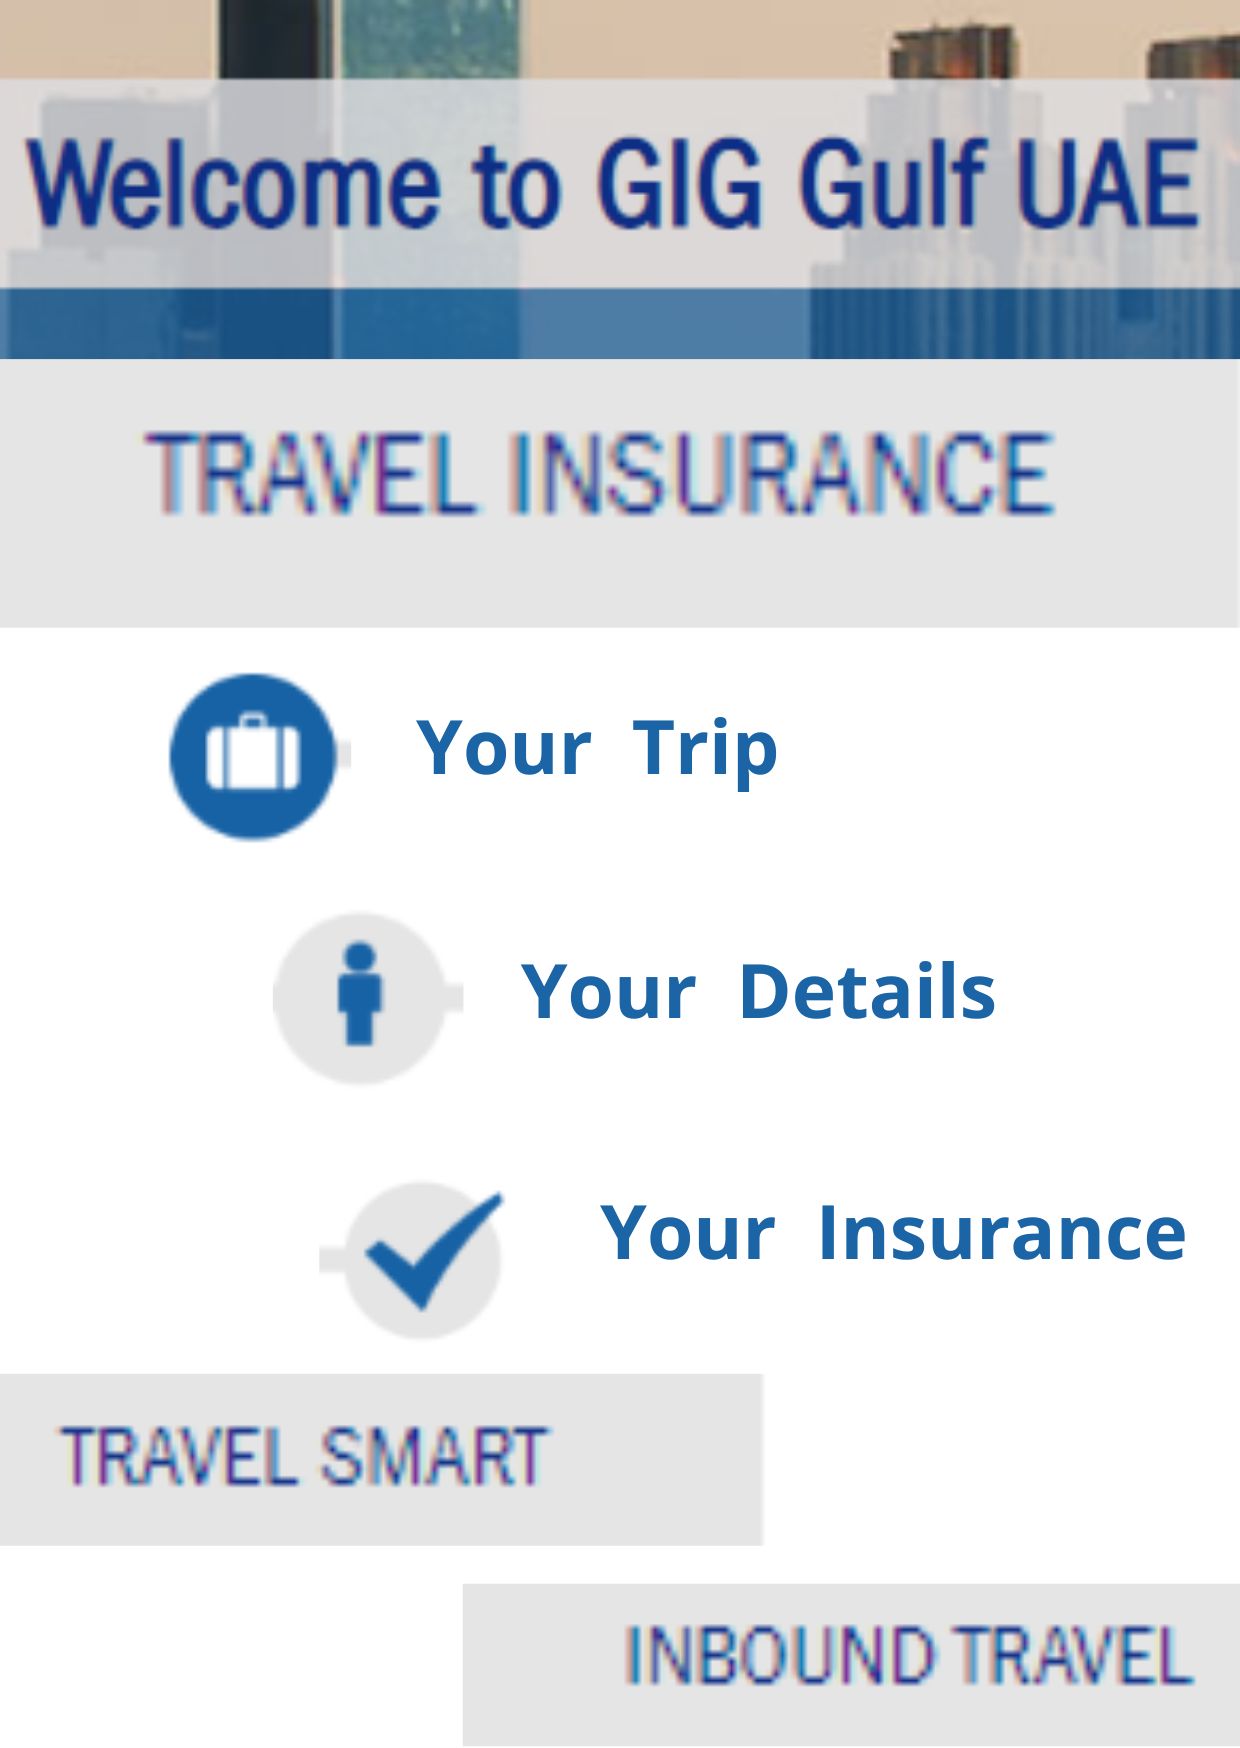 GIG Gulf Travel Insurance - Gargash Insurance 